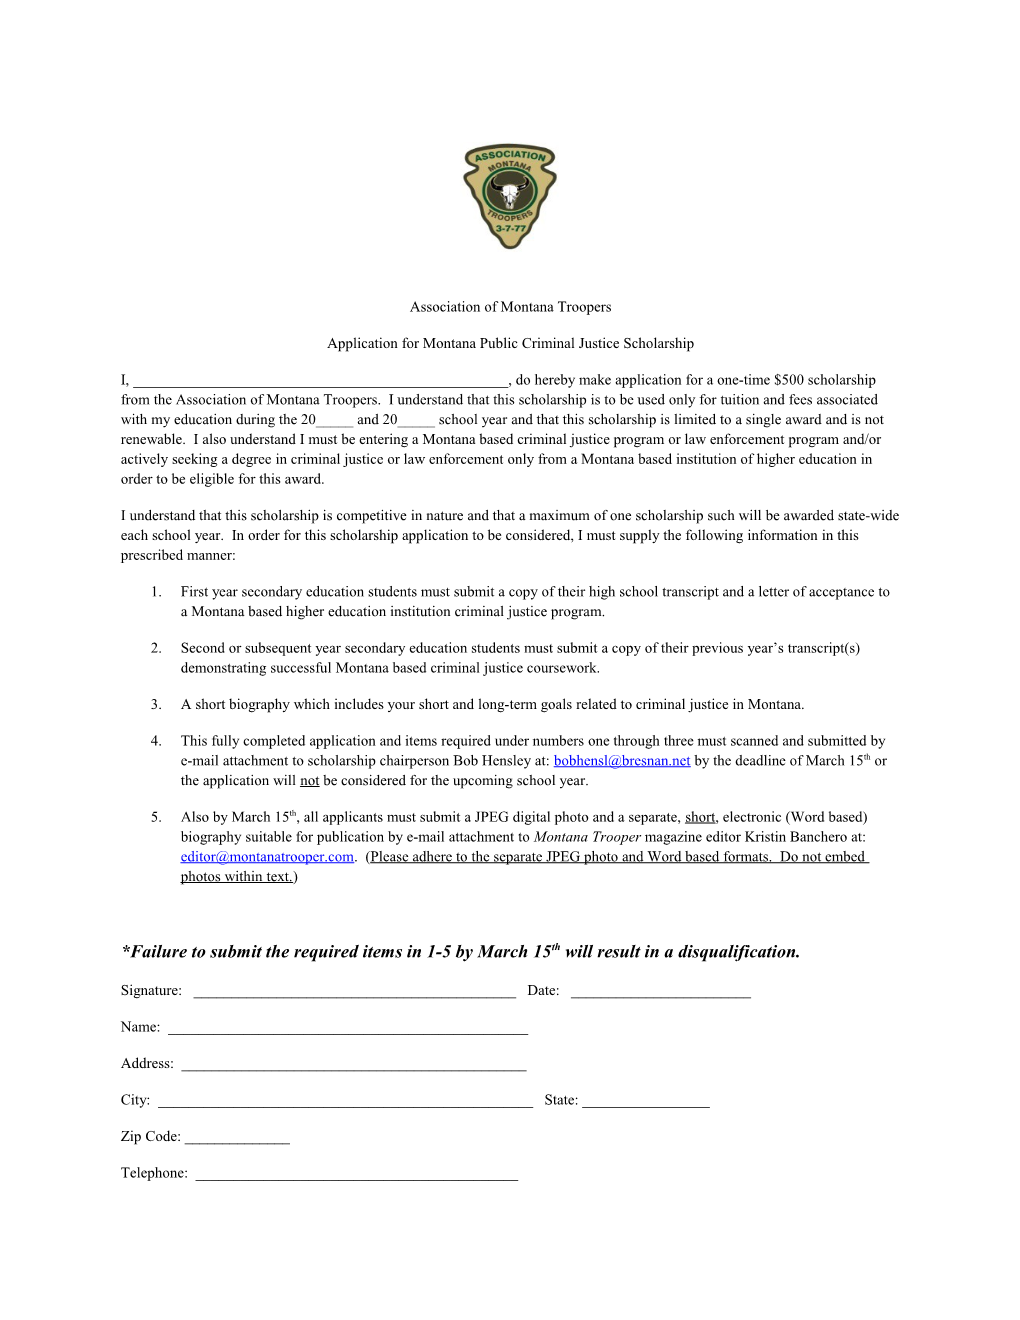 Application for Montana Public Criminal Justice Scholarship